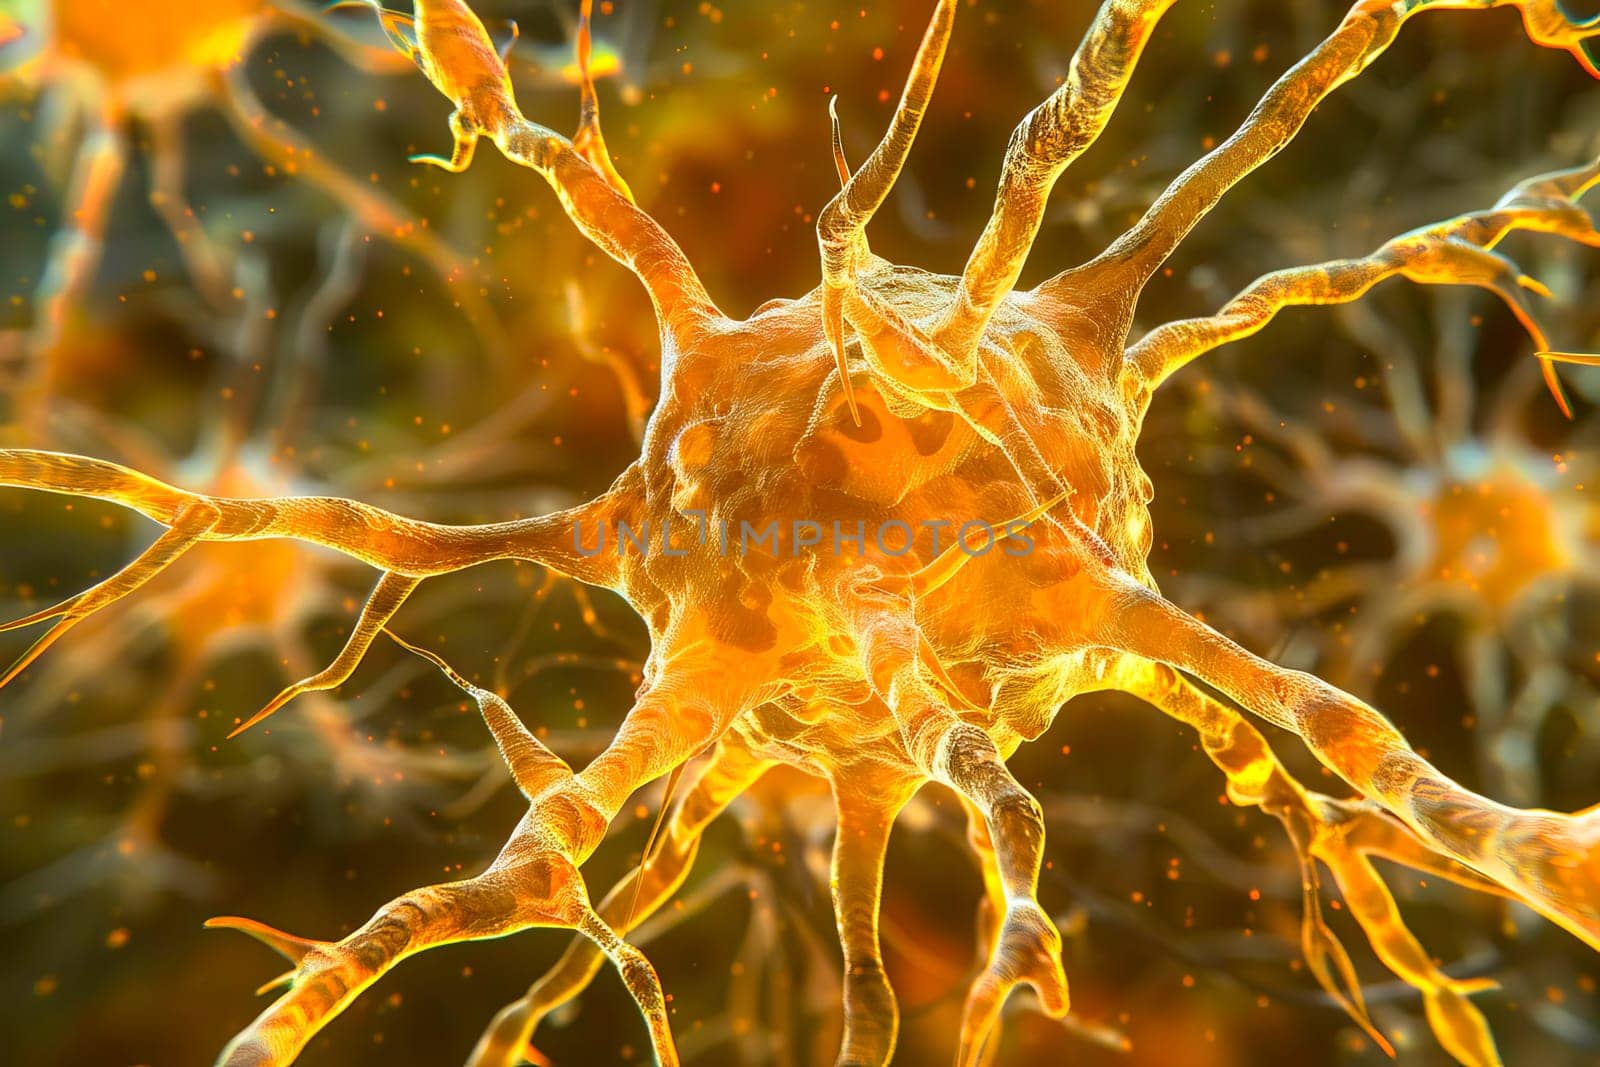 A close-up view of neural activity in the human brain, showcasing firing neurons.